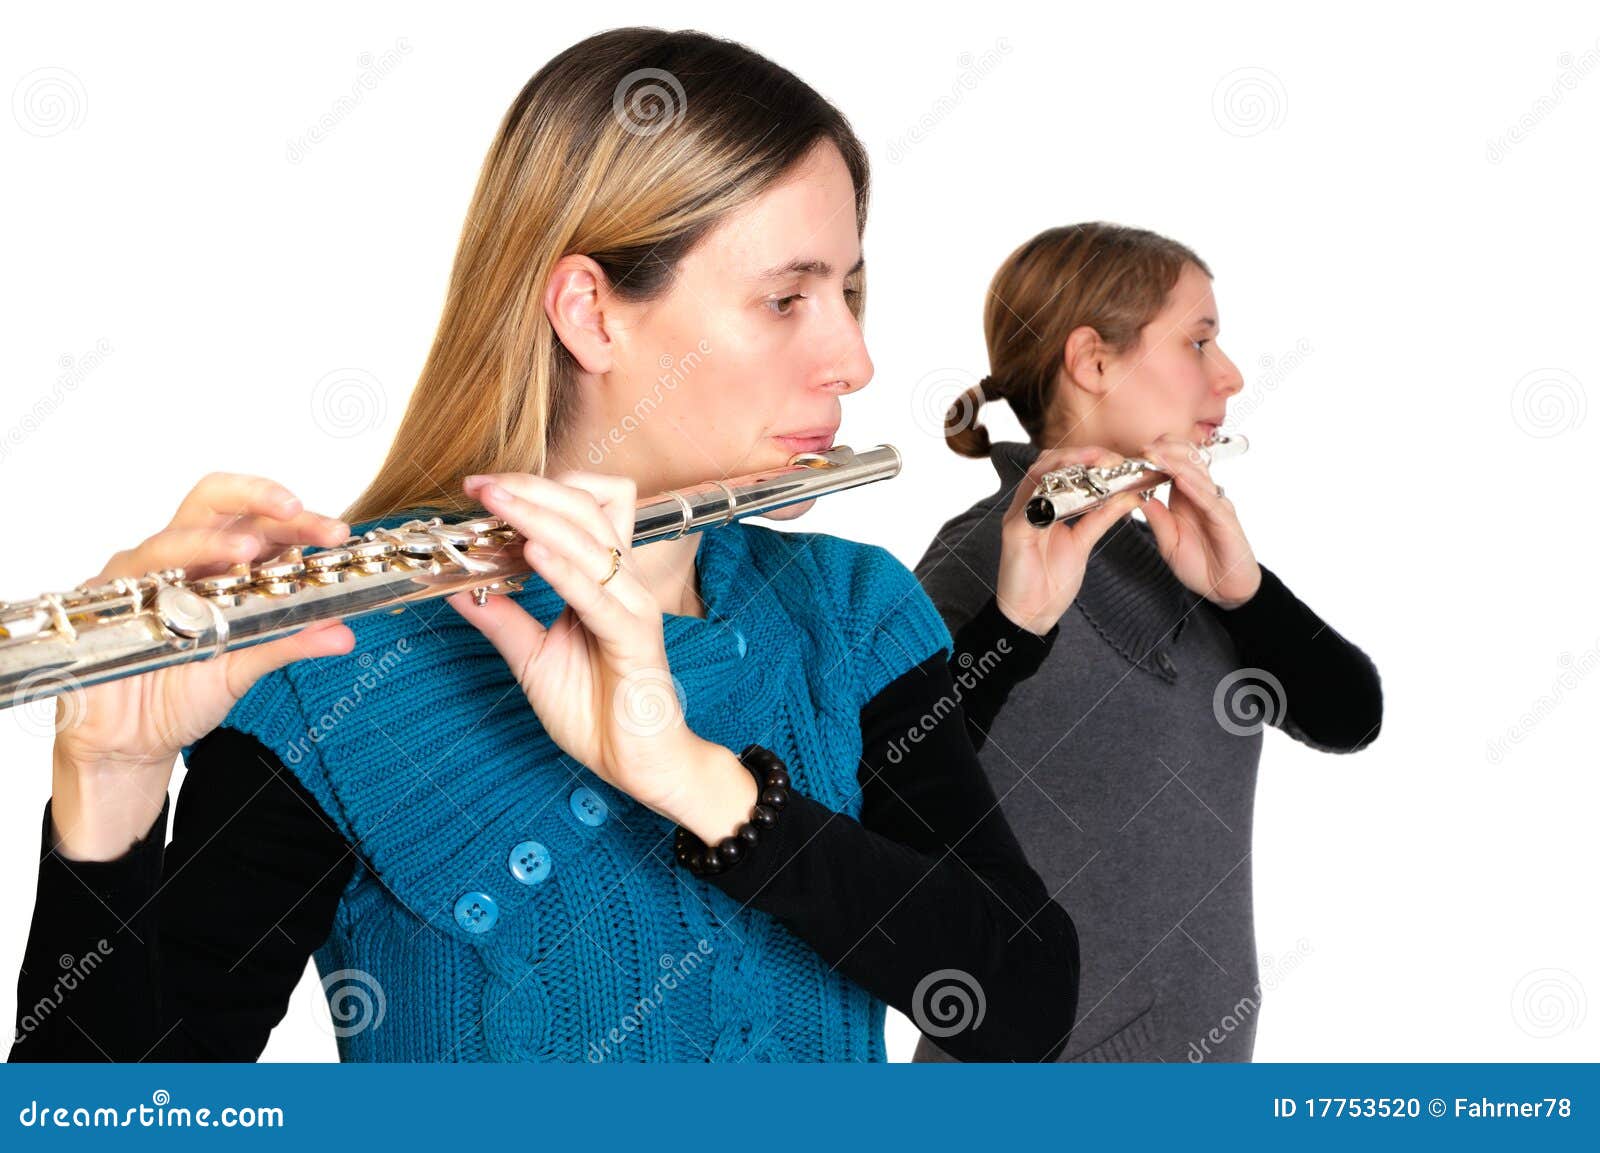 transverse flute